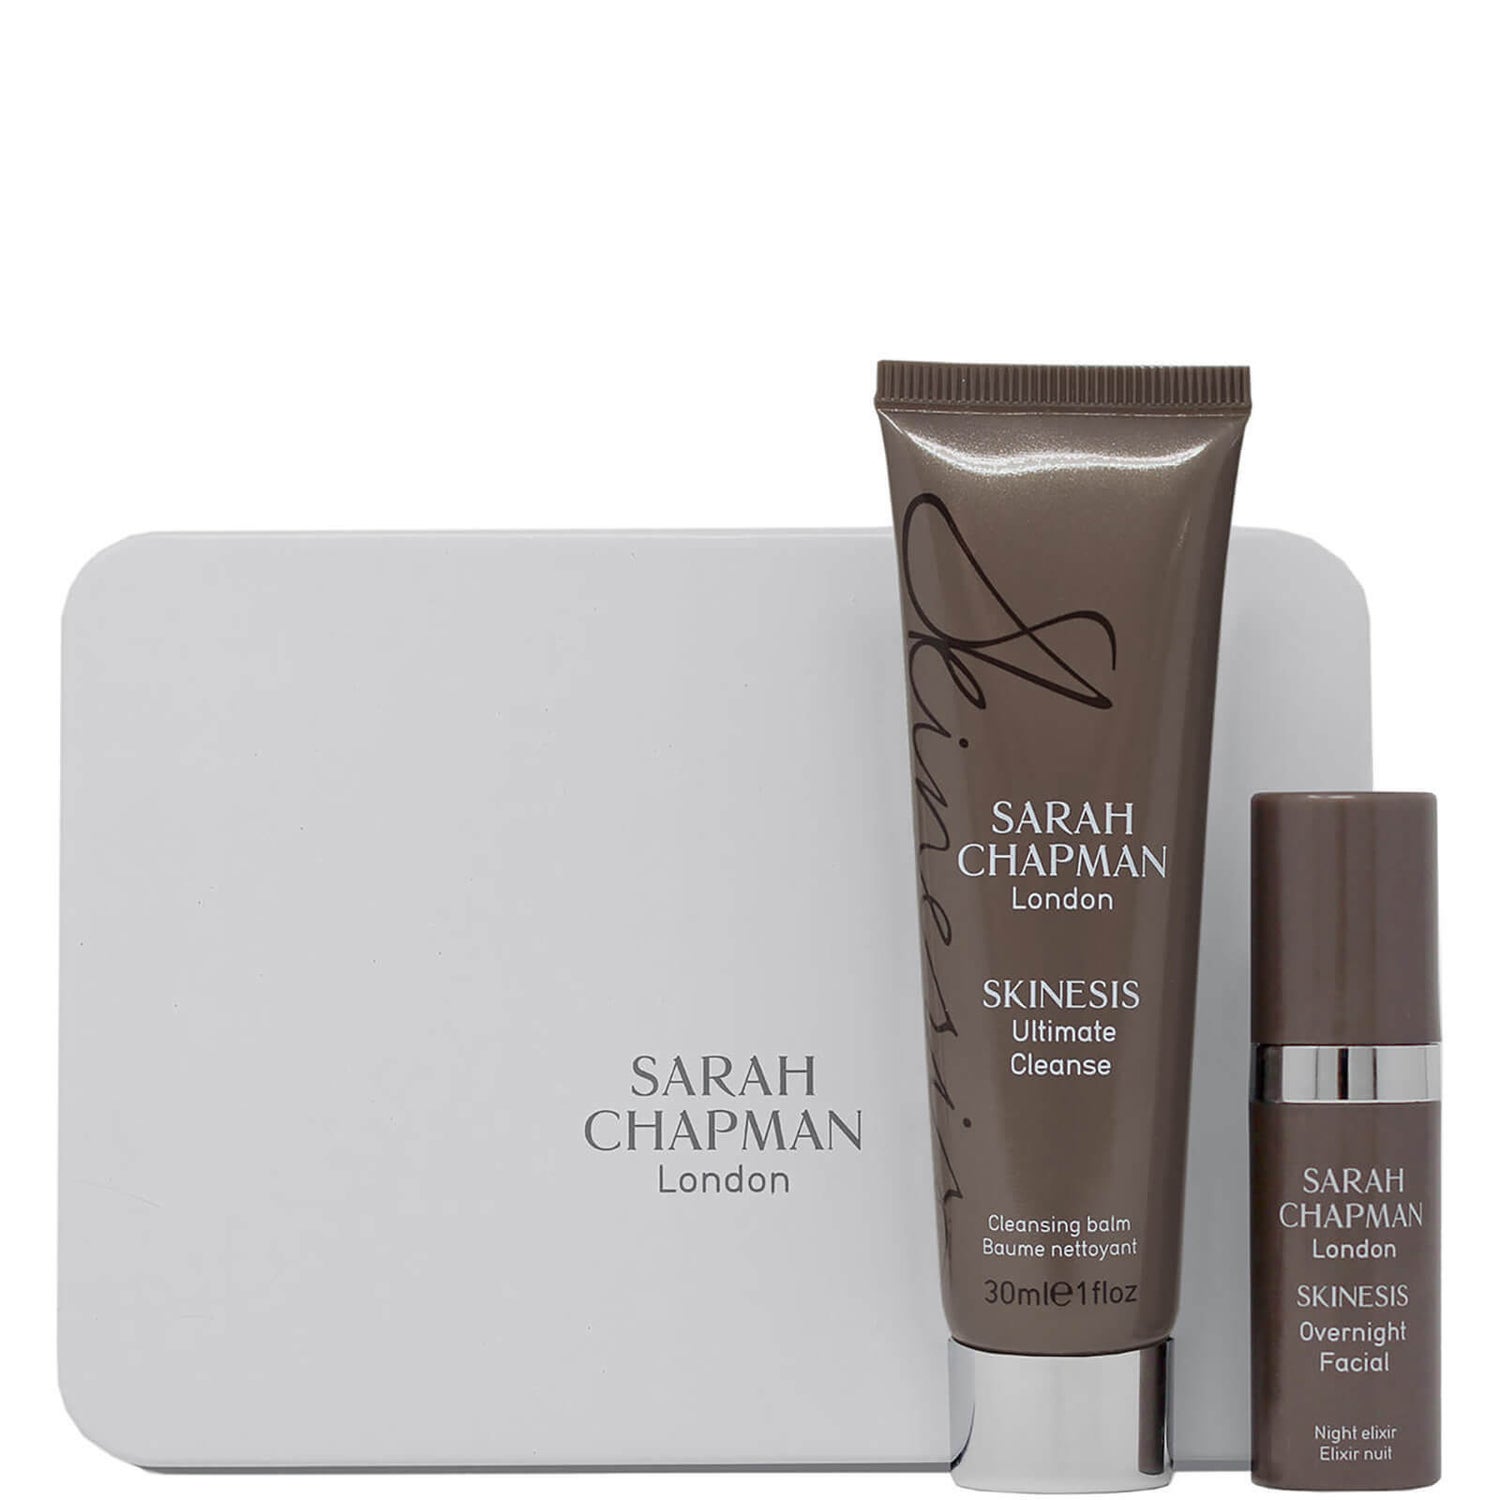 Sarah Chapman Skinesis Cleanse and Glow Gift Set